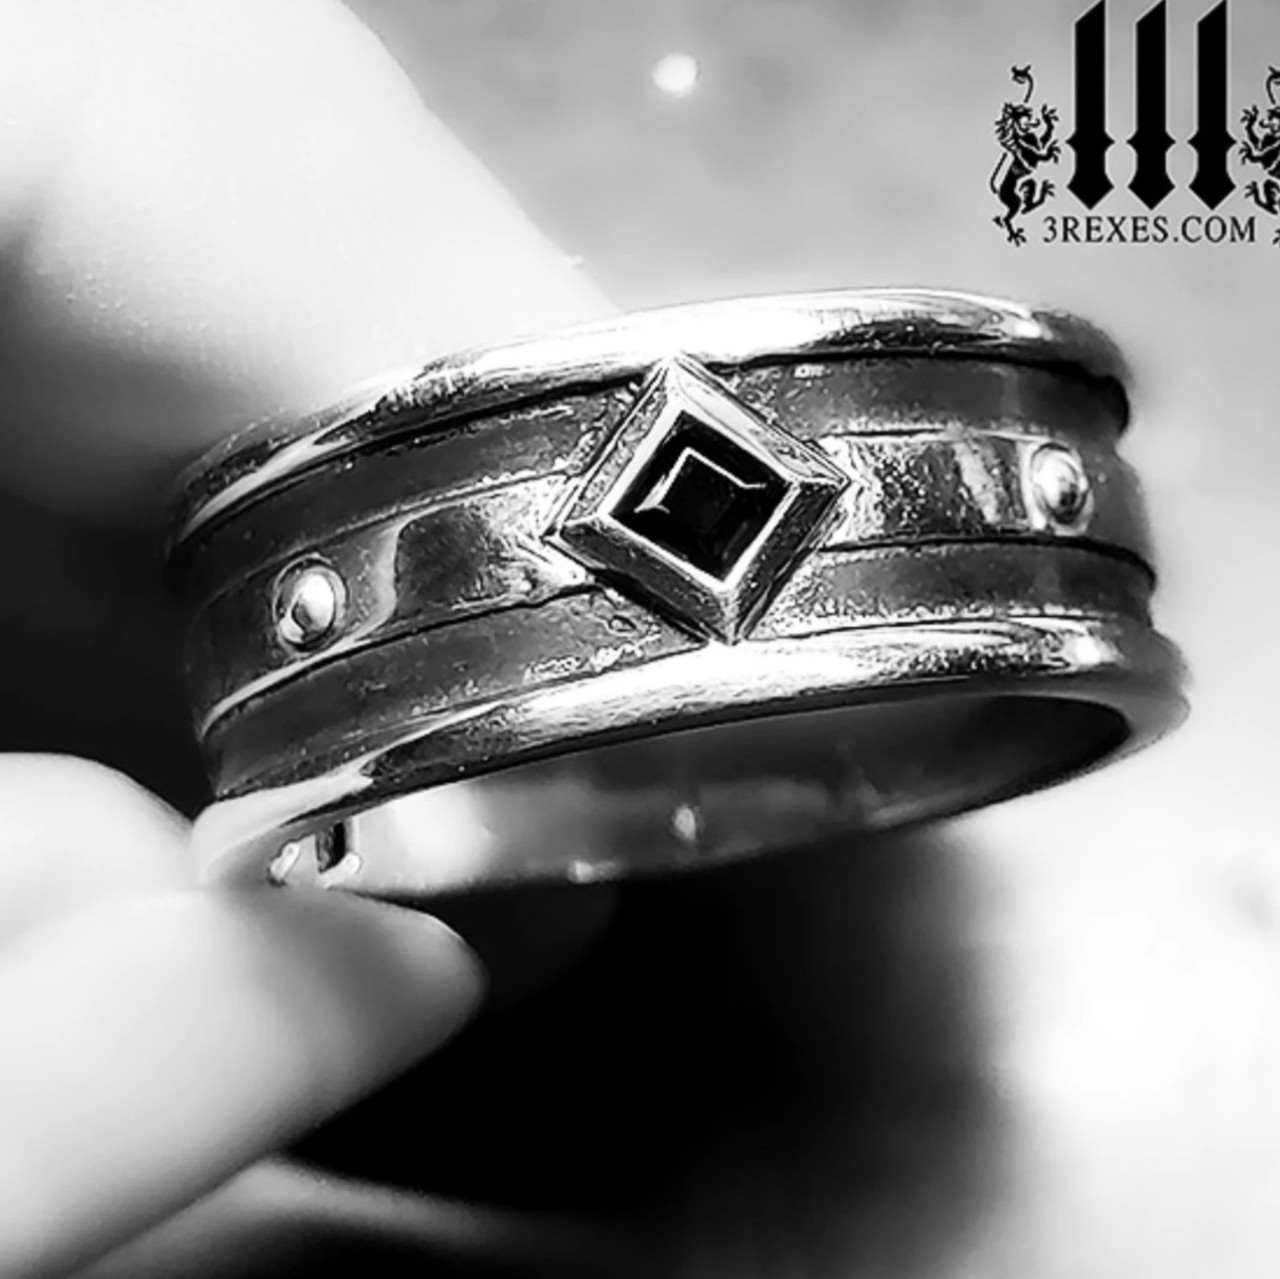 6mm/8mm Black Titanium Ring for Men Women Beveled Edge Polished Brushed  Comfort Fit (Black(6MM), 9)|Amazon.com